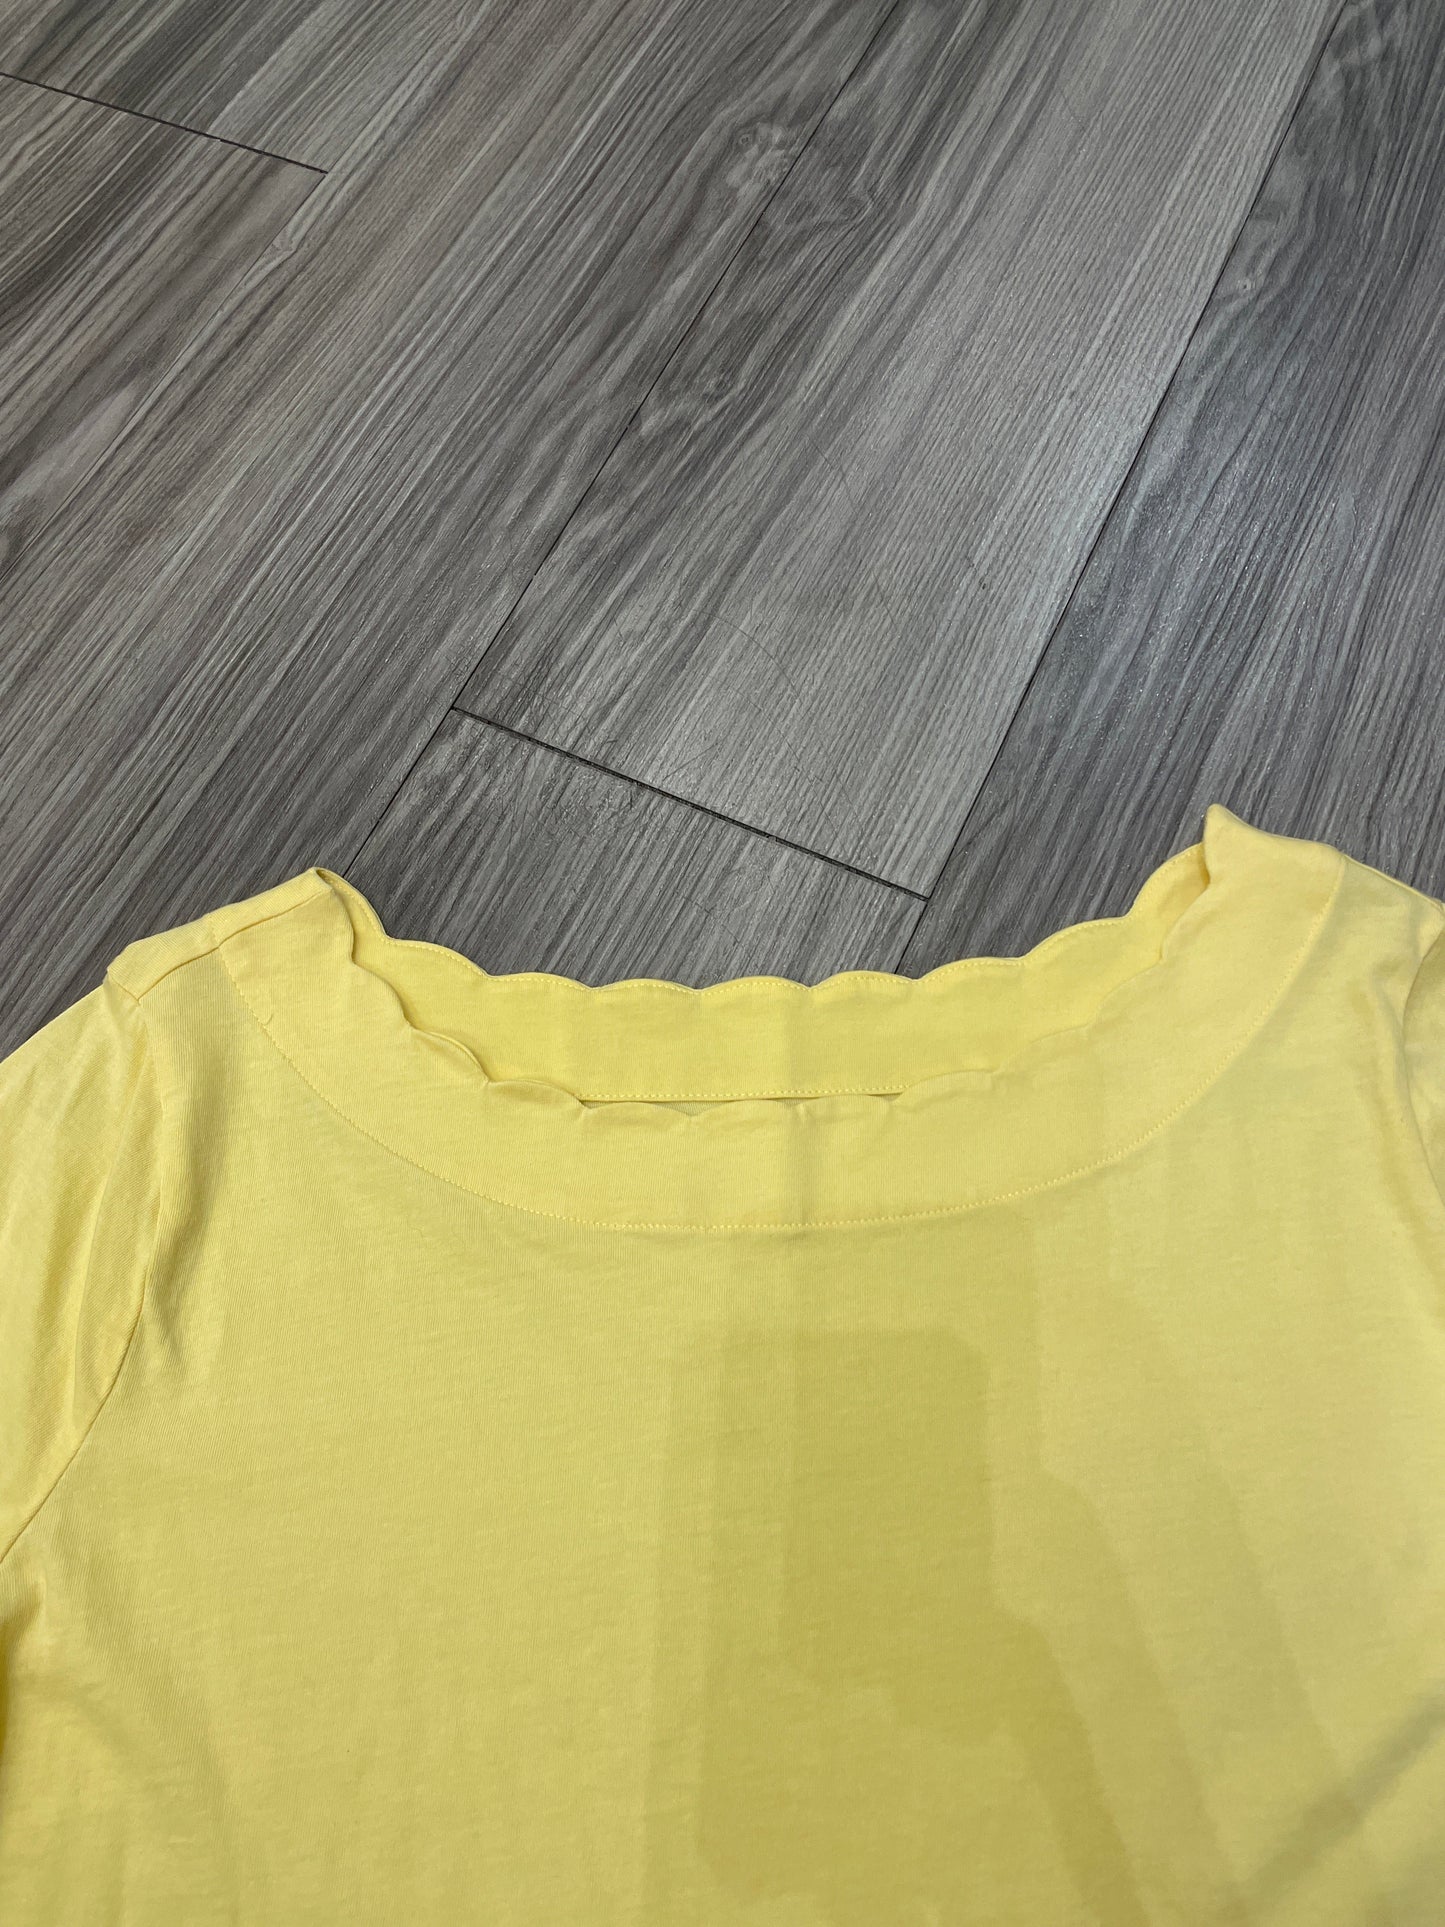 Yellow Top Short Sleeve Talbots, Size 1x